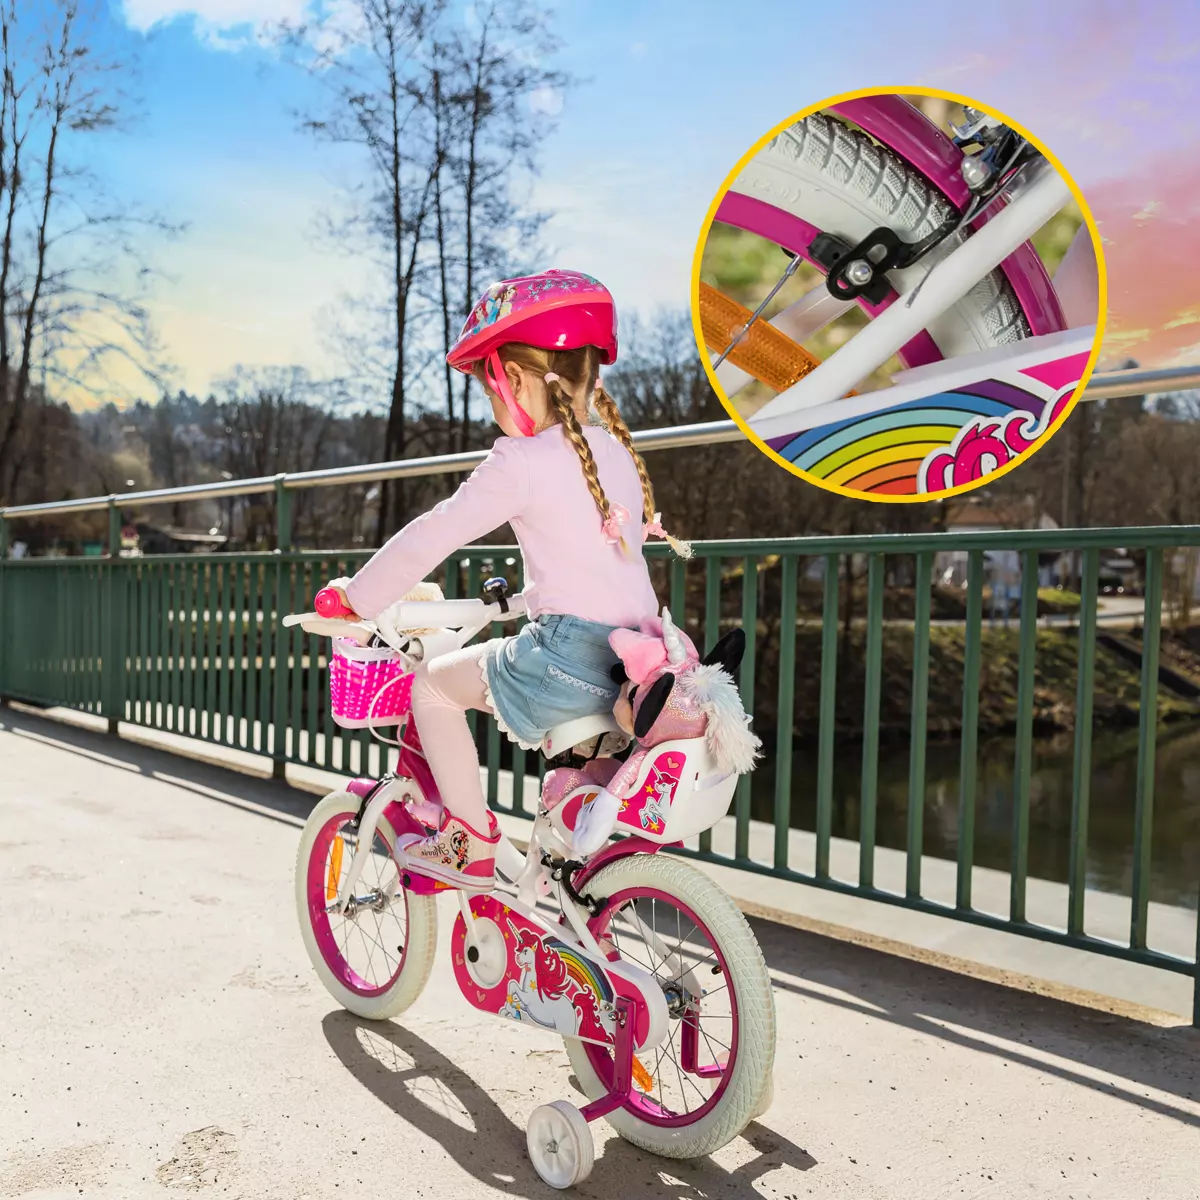 Actionbikes Kinderfahrrad Unicorn 12 Zoll - Kinder Fahrrad für